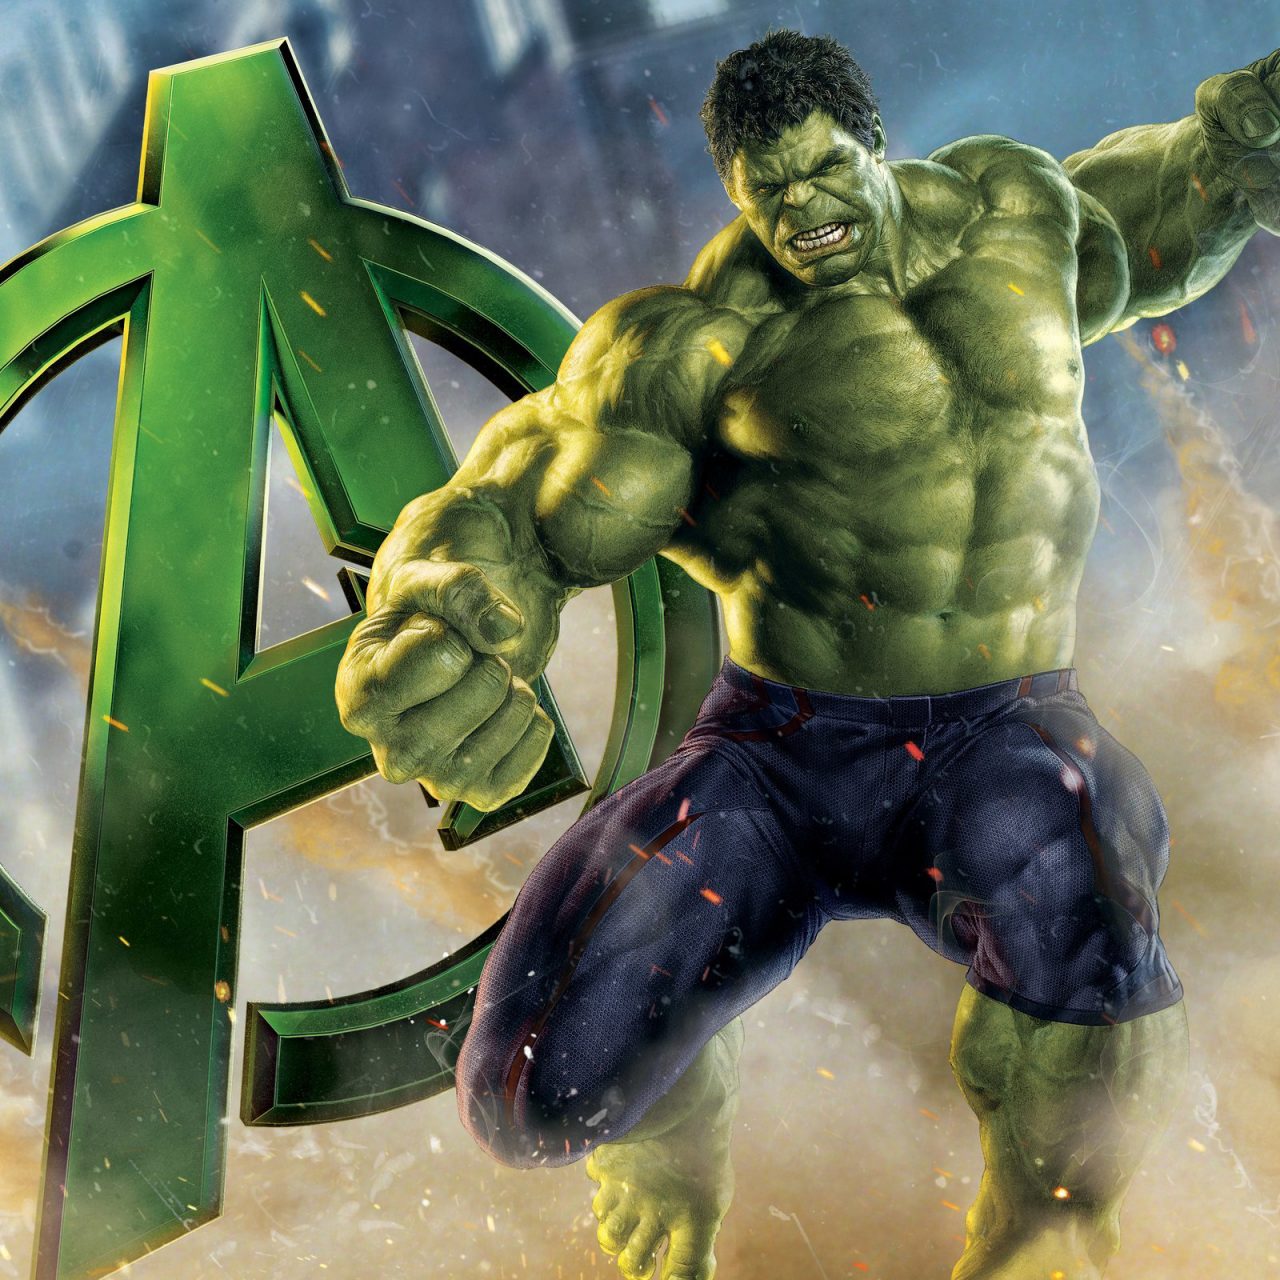 Download Hulk Avengers Hulk Wallpaper RoyaltyFree Stock Illustration Image   Pixabay